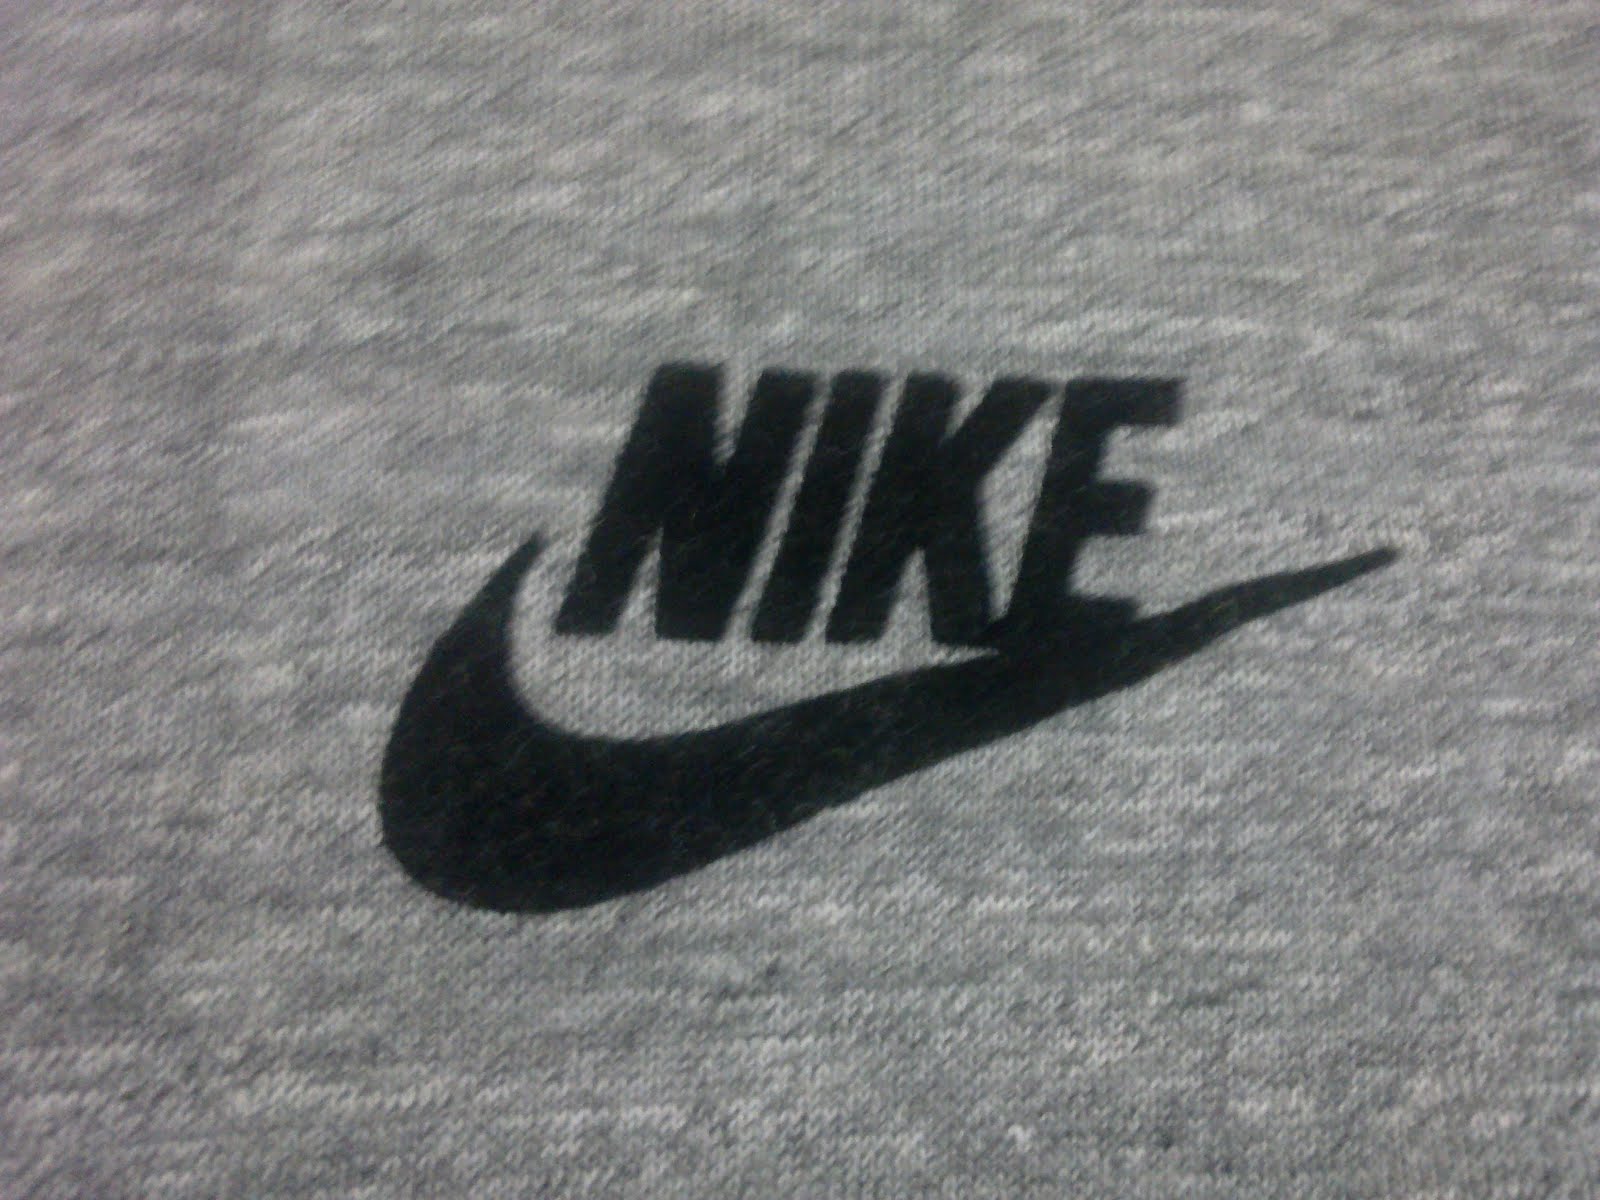 Kobe Bundle: Vintage 3 blend Nike ringer t-shirt tag by Sportswear (SOLD)